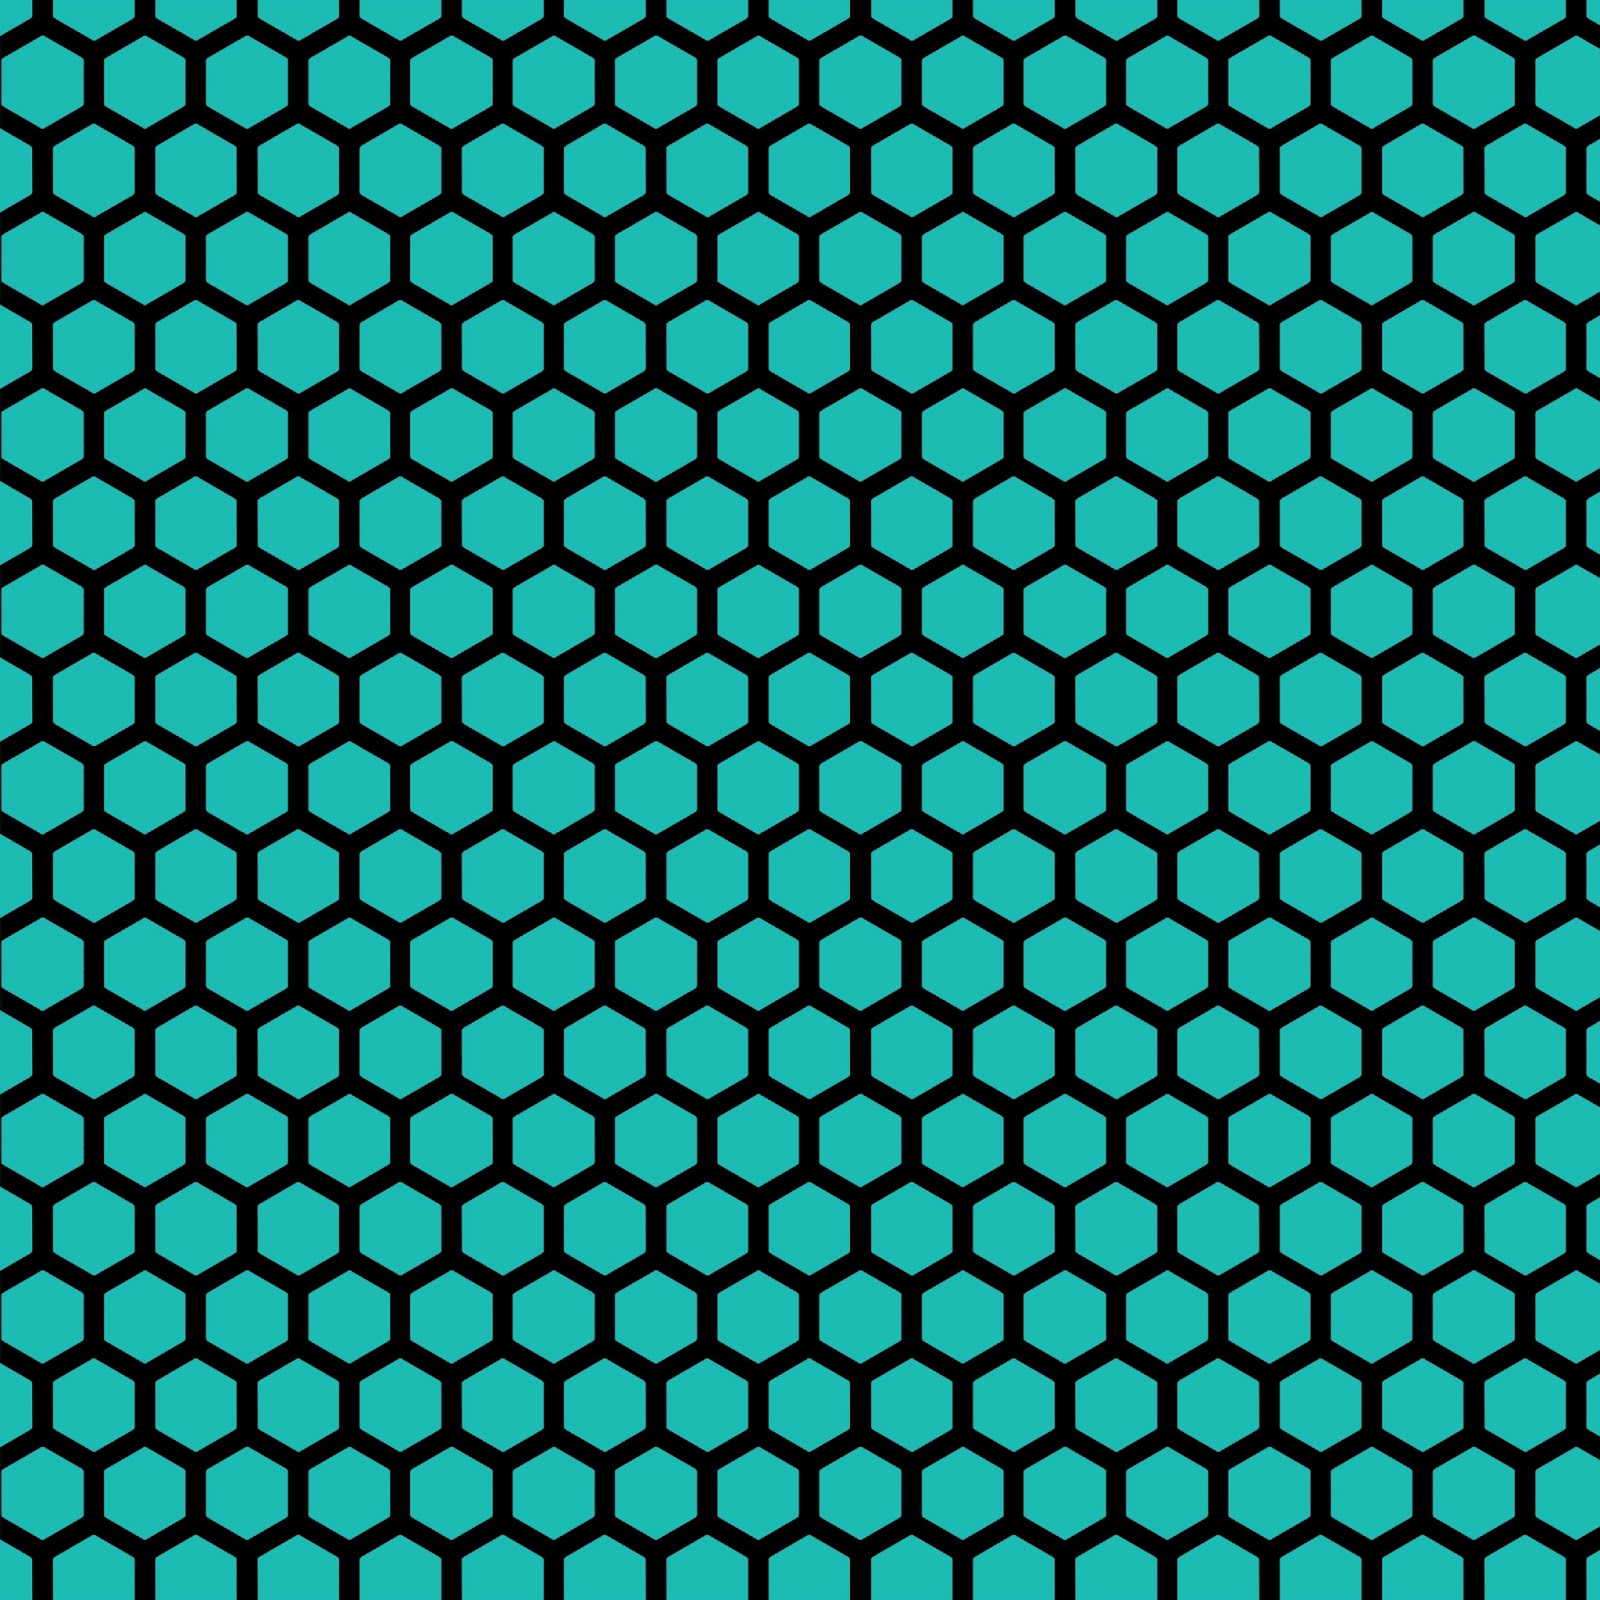 Light Teal Honeyb Hexagon Background Pattern Wallpaper Bie Jpg